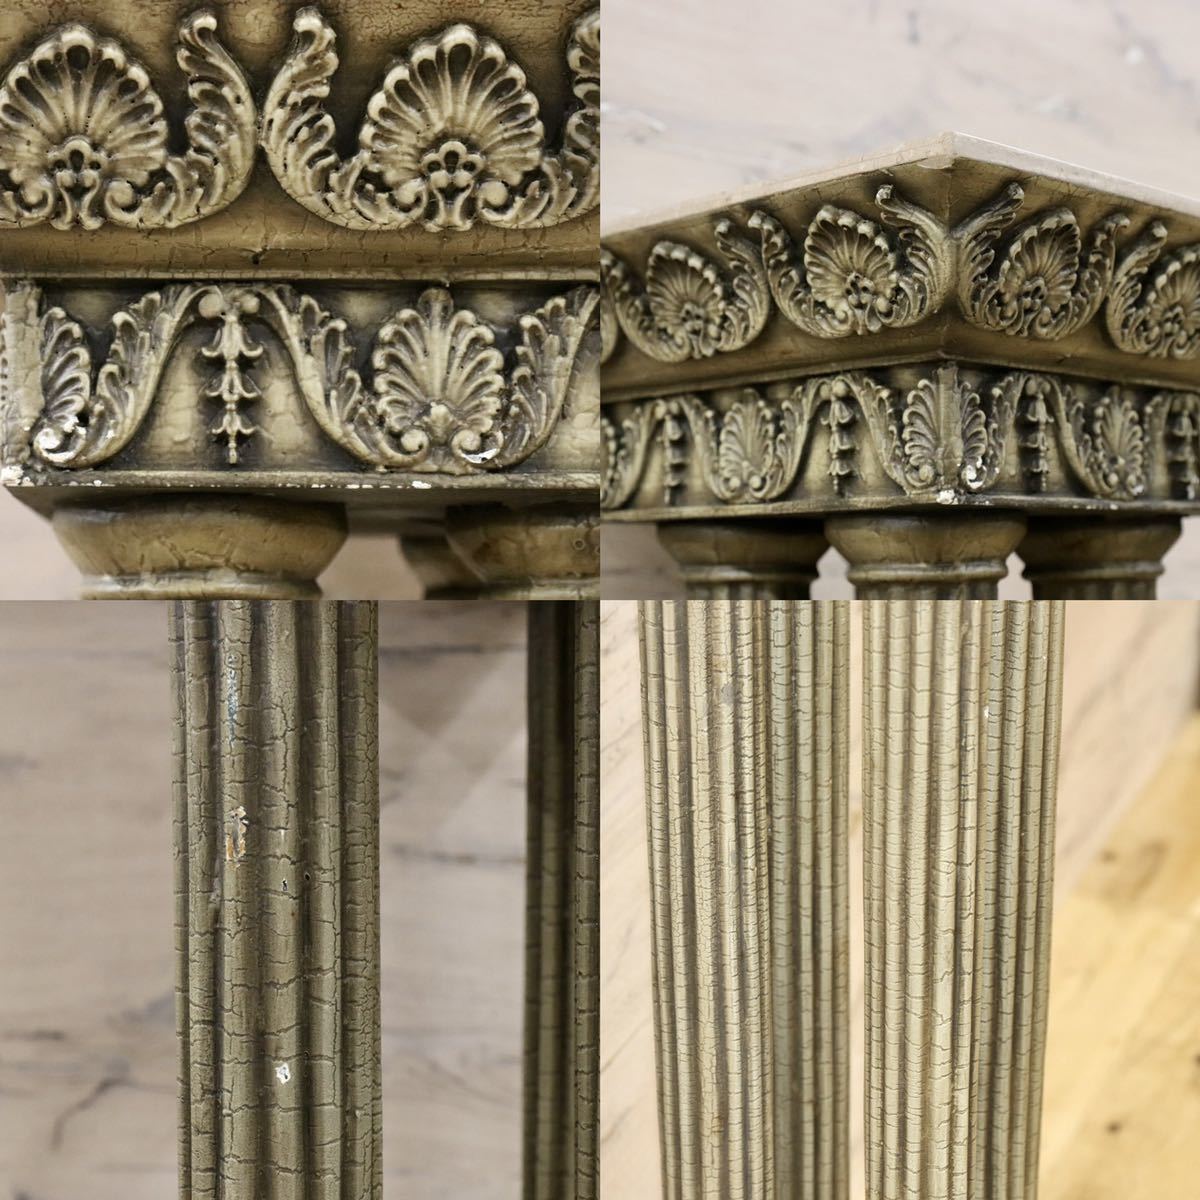 GMFK214B○西洋 ヨーロピアン クラシック オブジェ 玄関飾 置物 装飾柱 